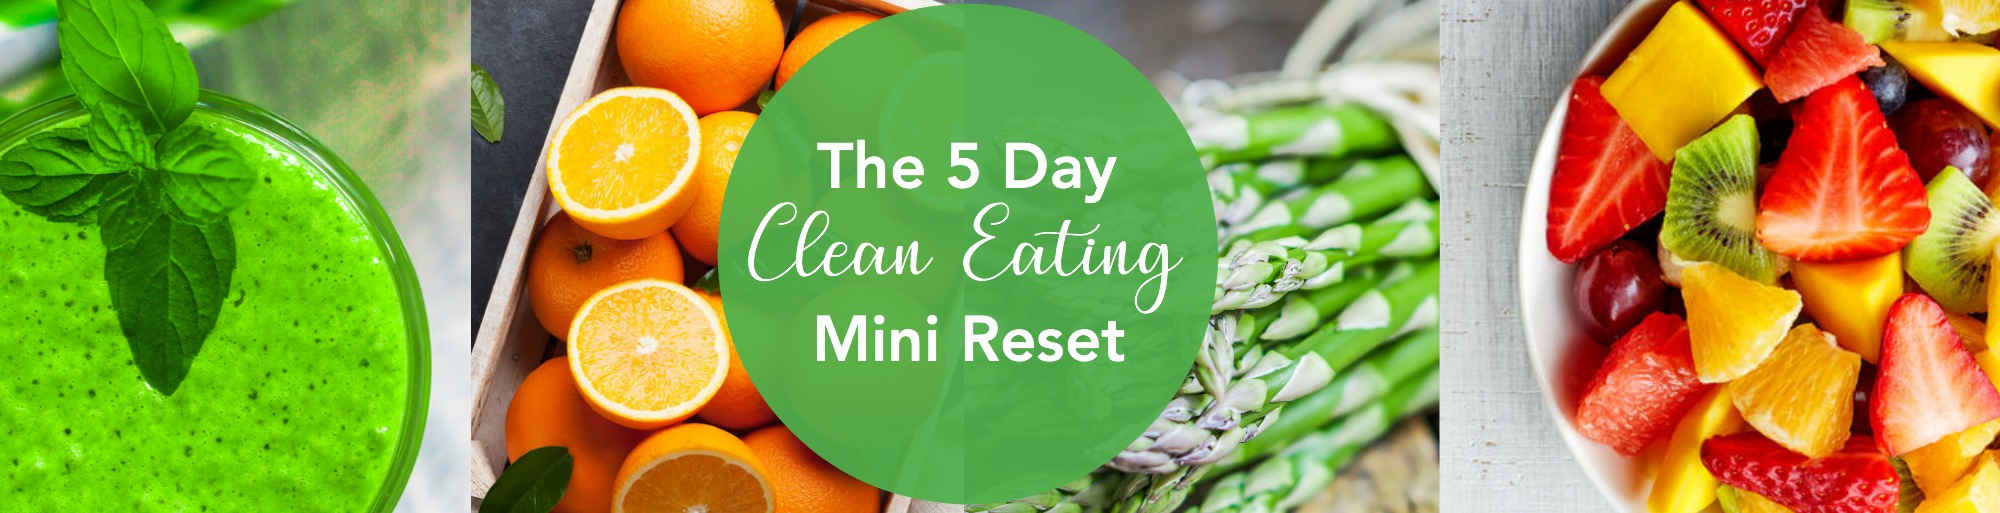 Clean Eating mini Reset Banner image 2